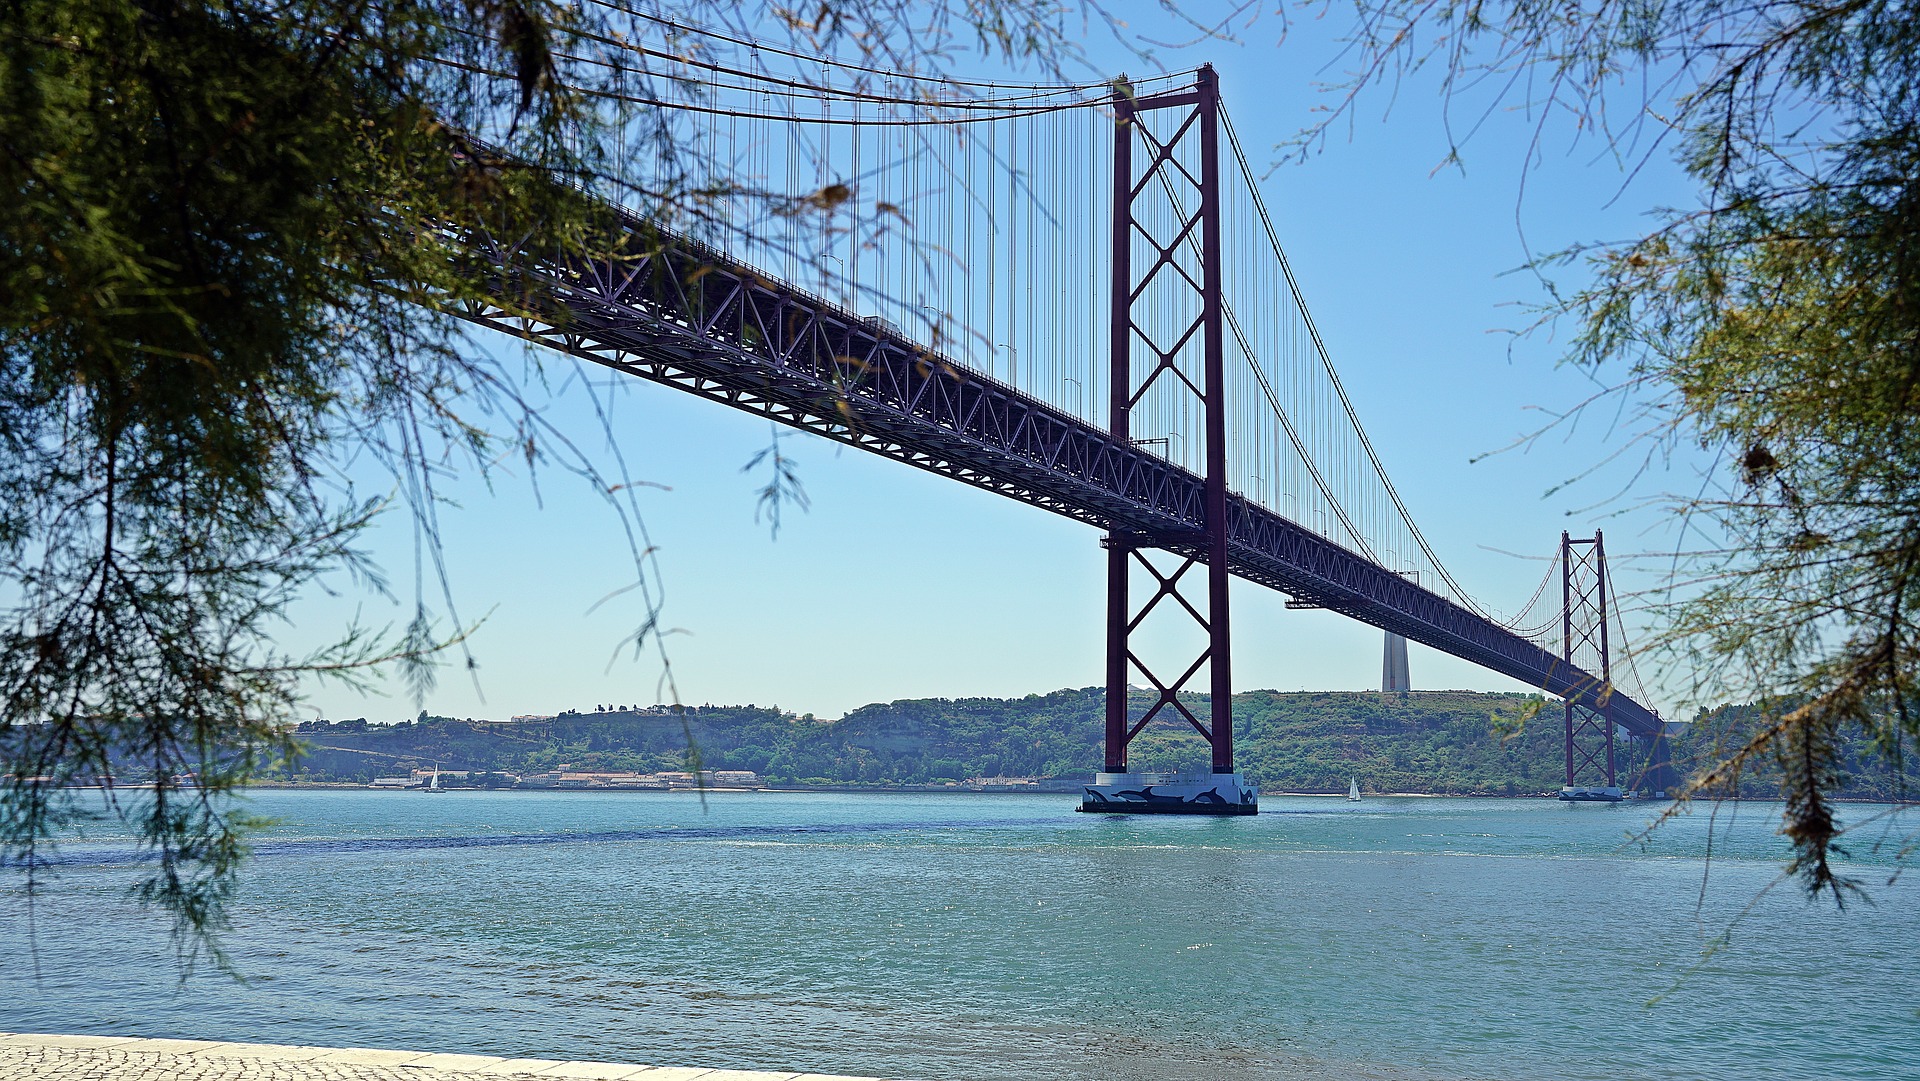 Berühmte Behlen Turm von Lissabon